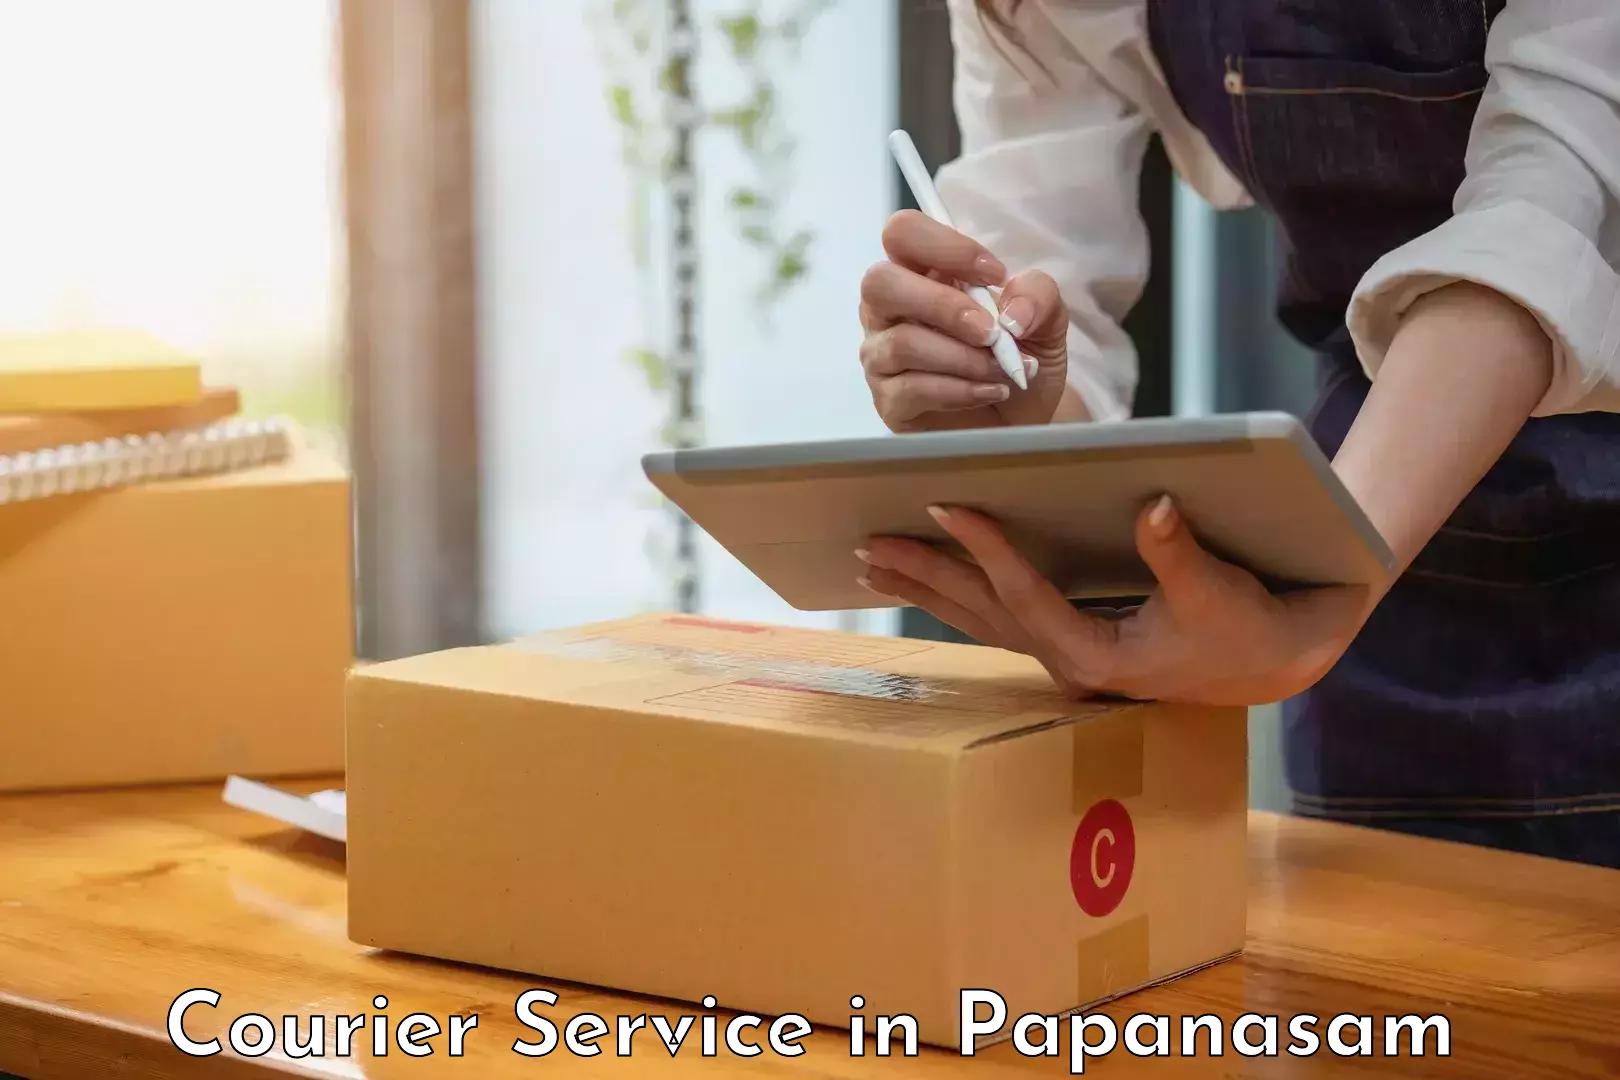 Efficient parcel service in Papanasam